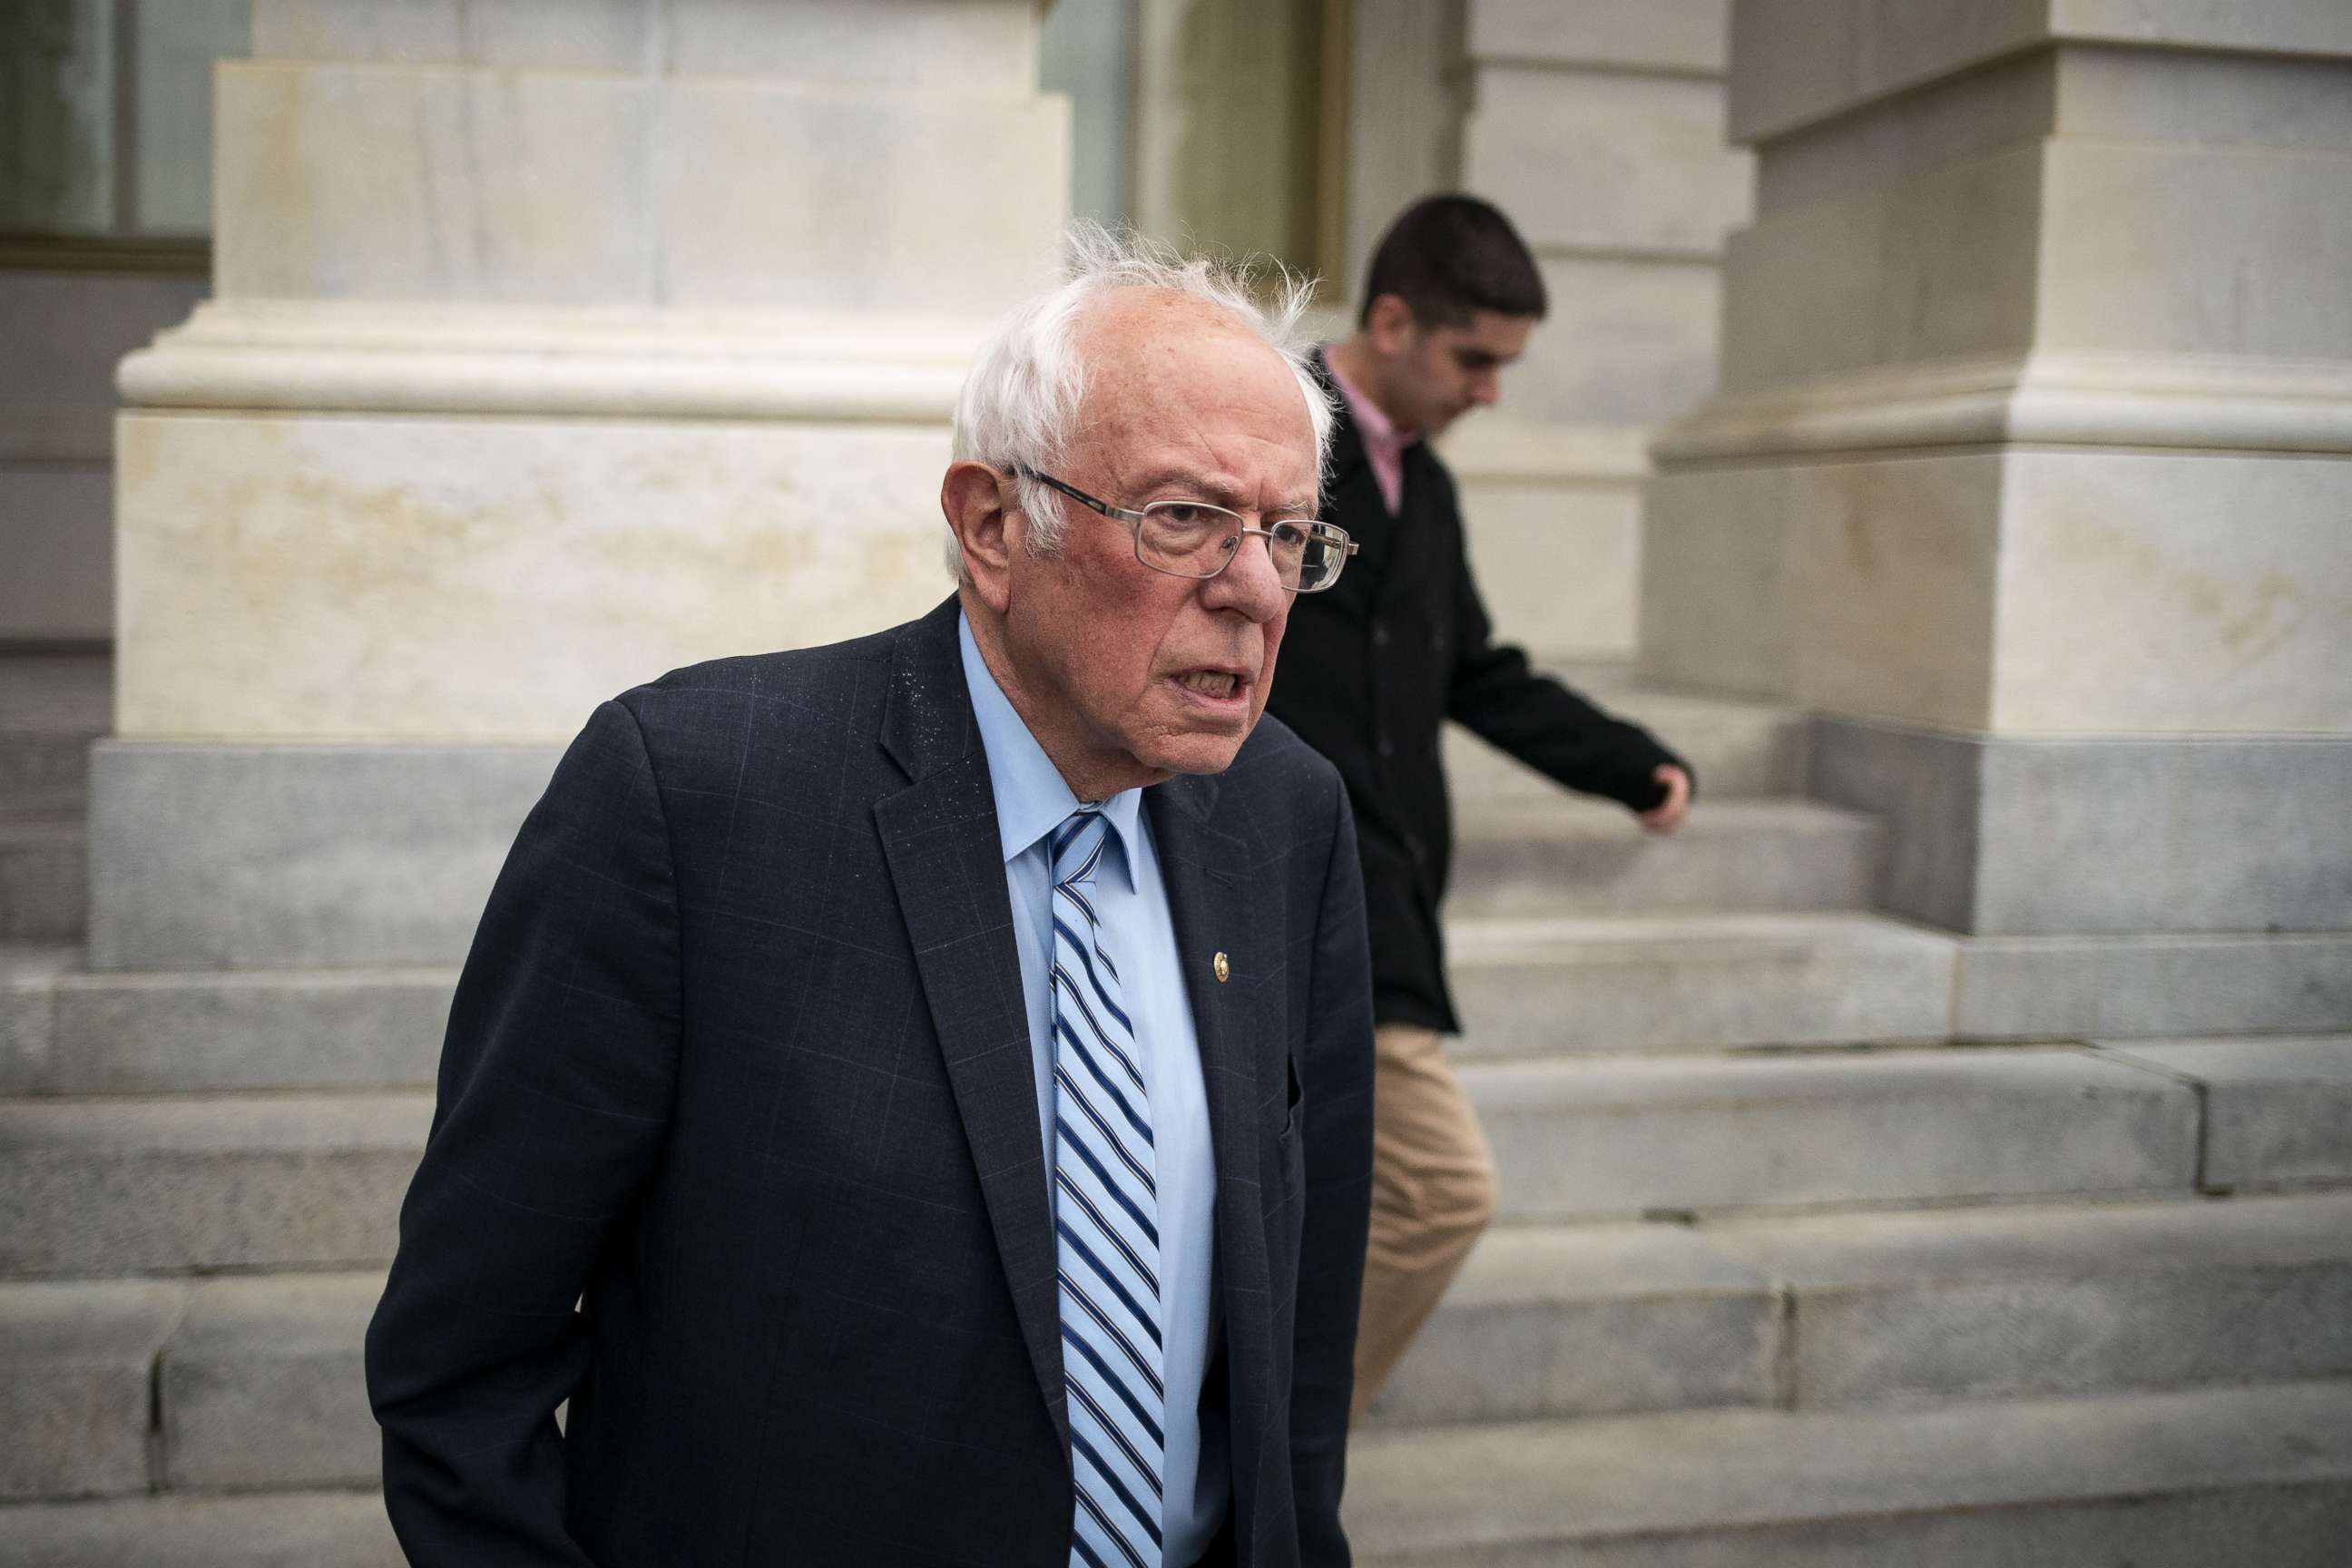 PHOTO: Sen. Bernie Sanders exits the U.S. Capitol after a vote in Washington, March 18, 2020.